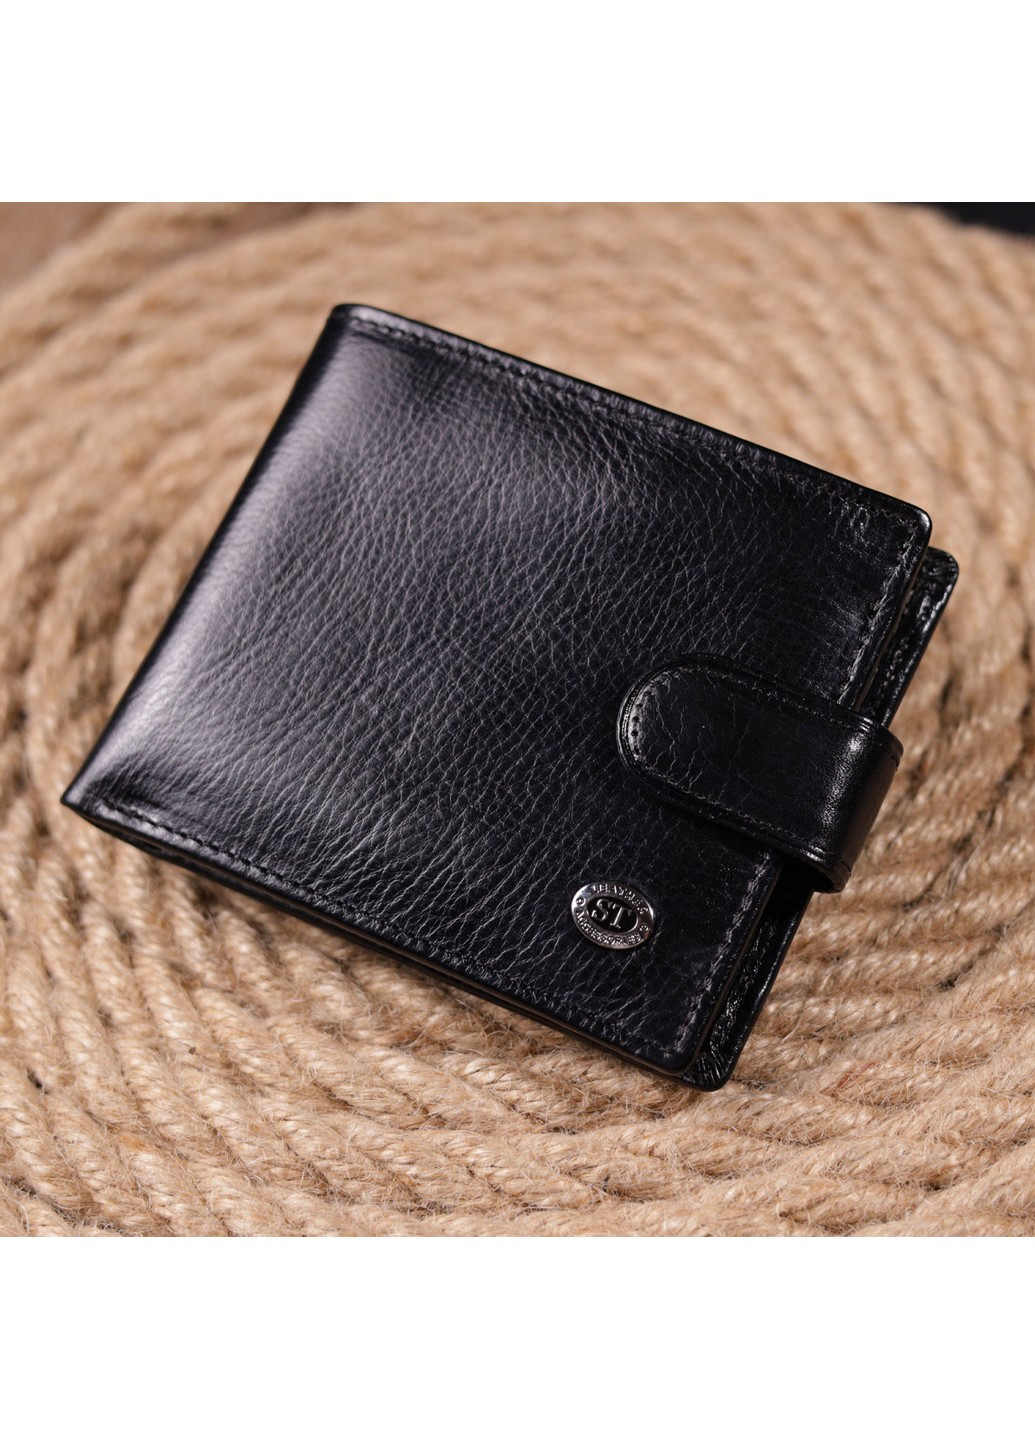 Бумажник кожаный мужской 11х9,5х2 см st leather (257255456)